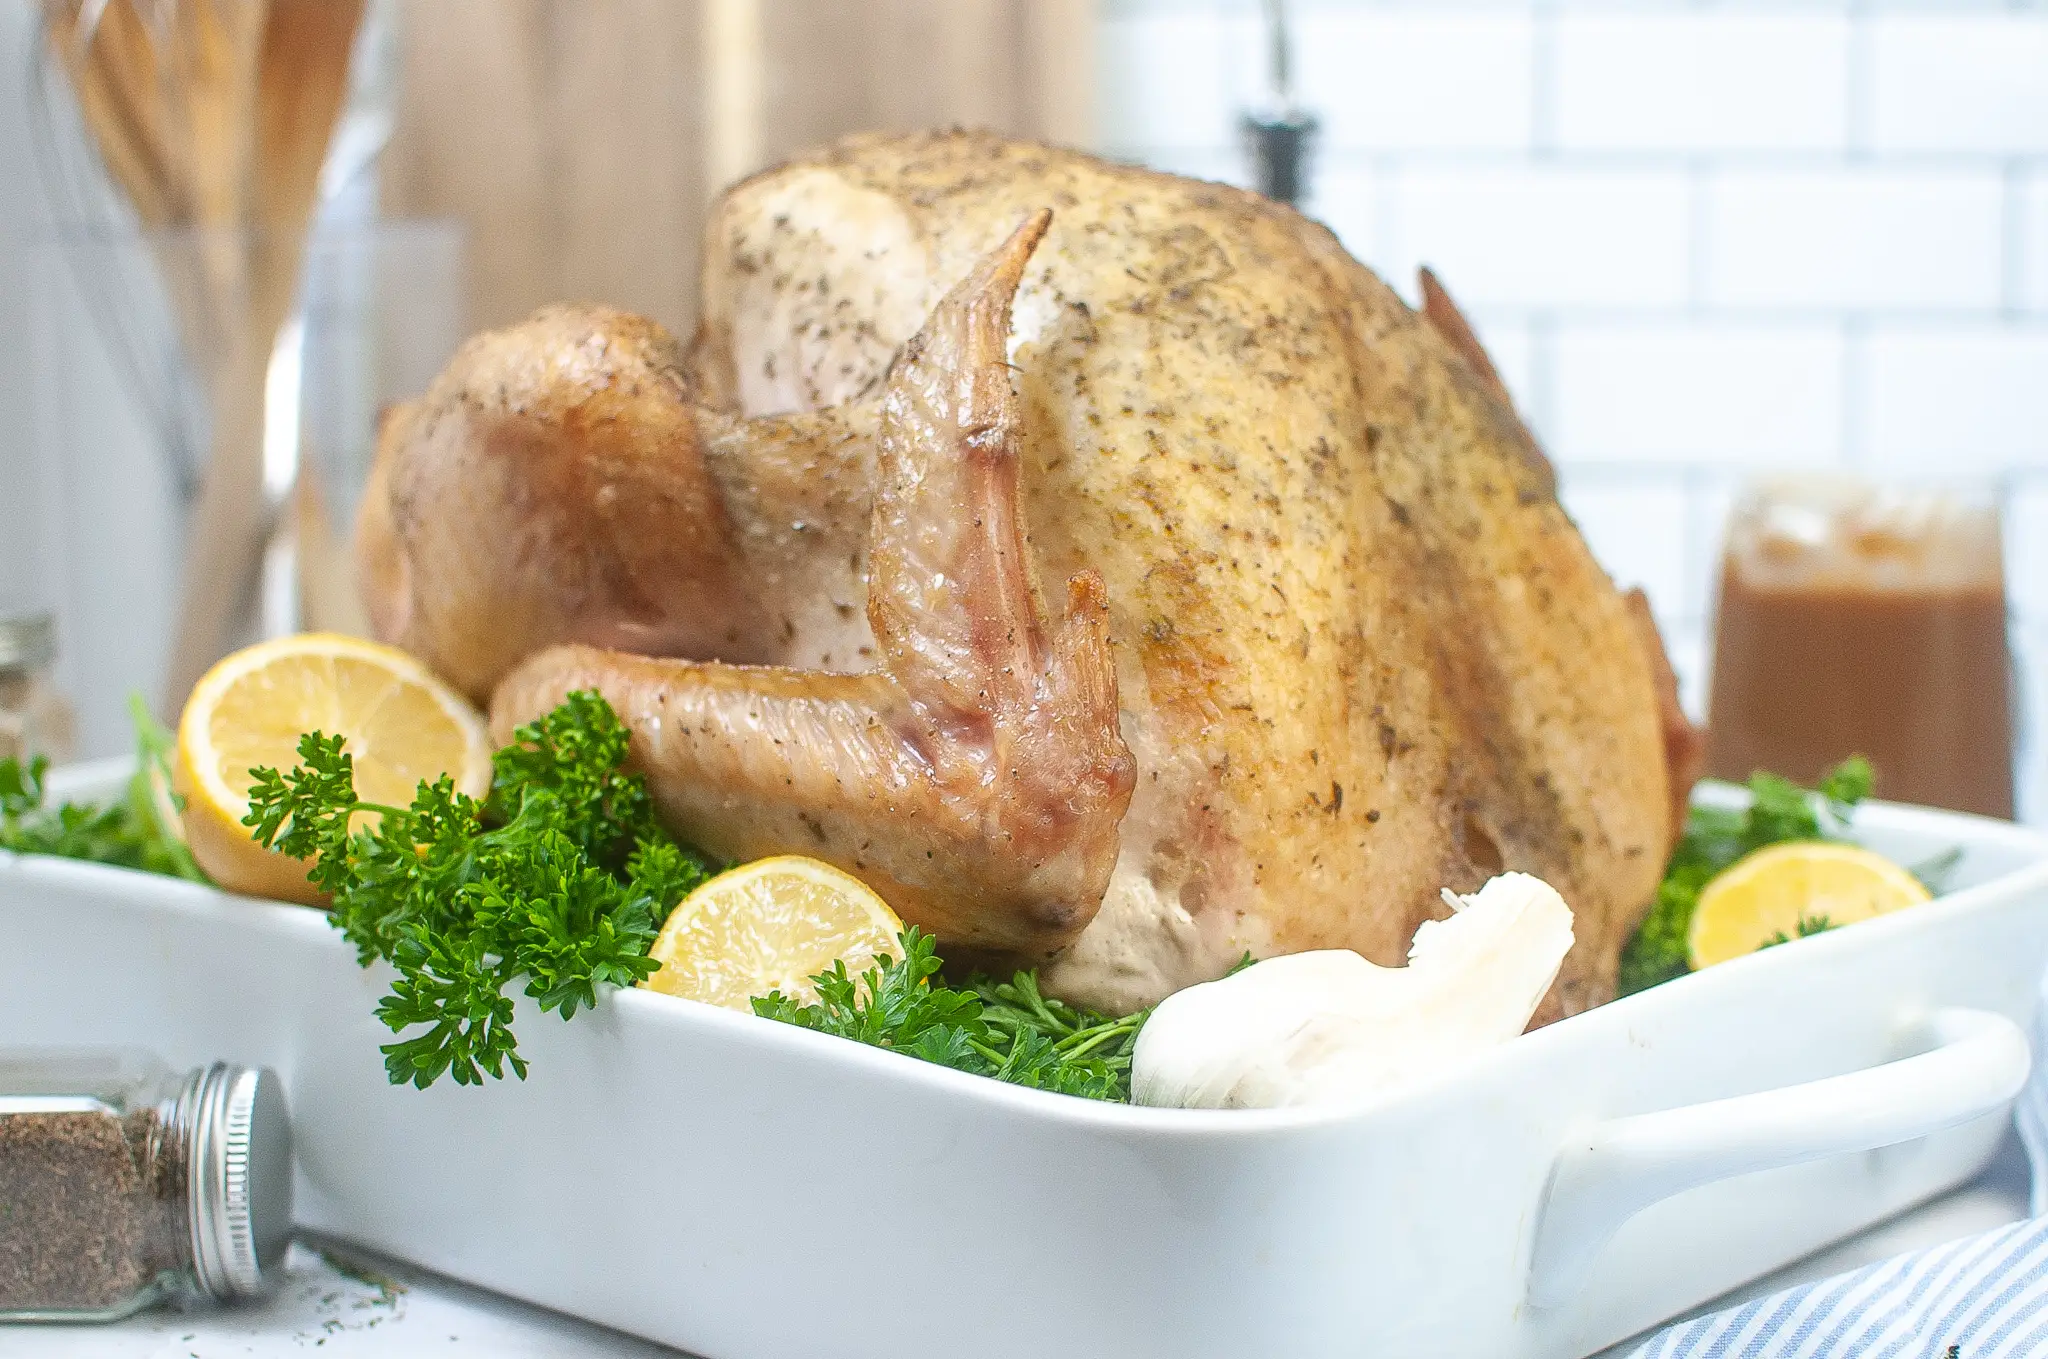 Roasted 15 lb turkey in roasting dish